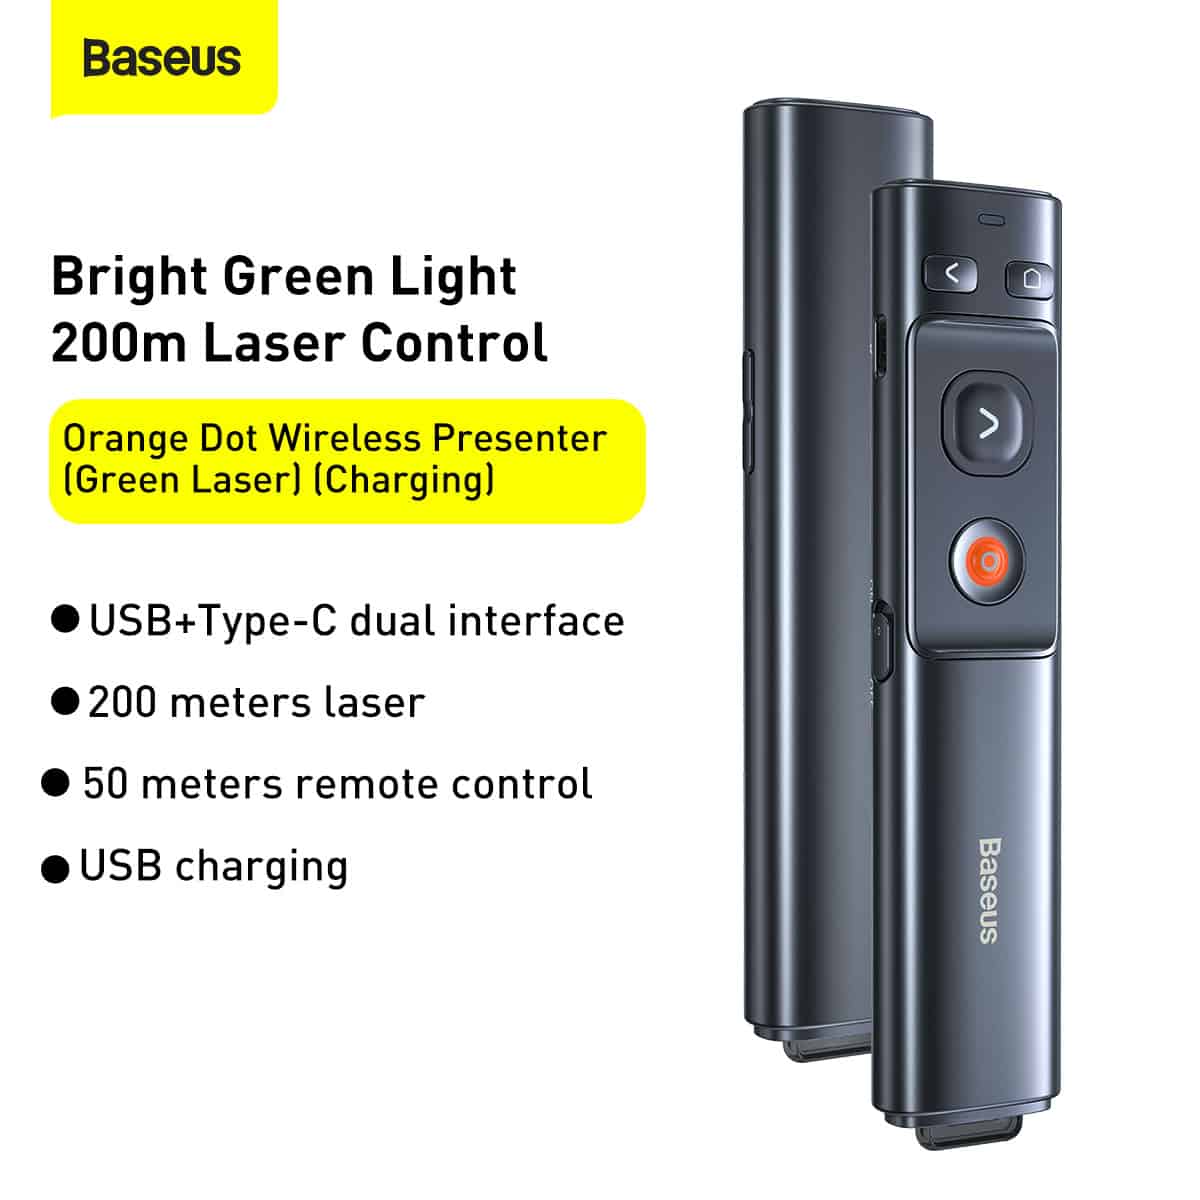 Baseus Orange Dot Wireless Presenter (Green Laser)(Charging) Grey - ibaseus.com